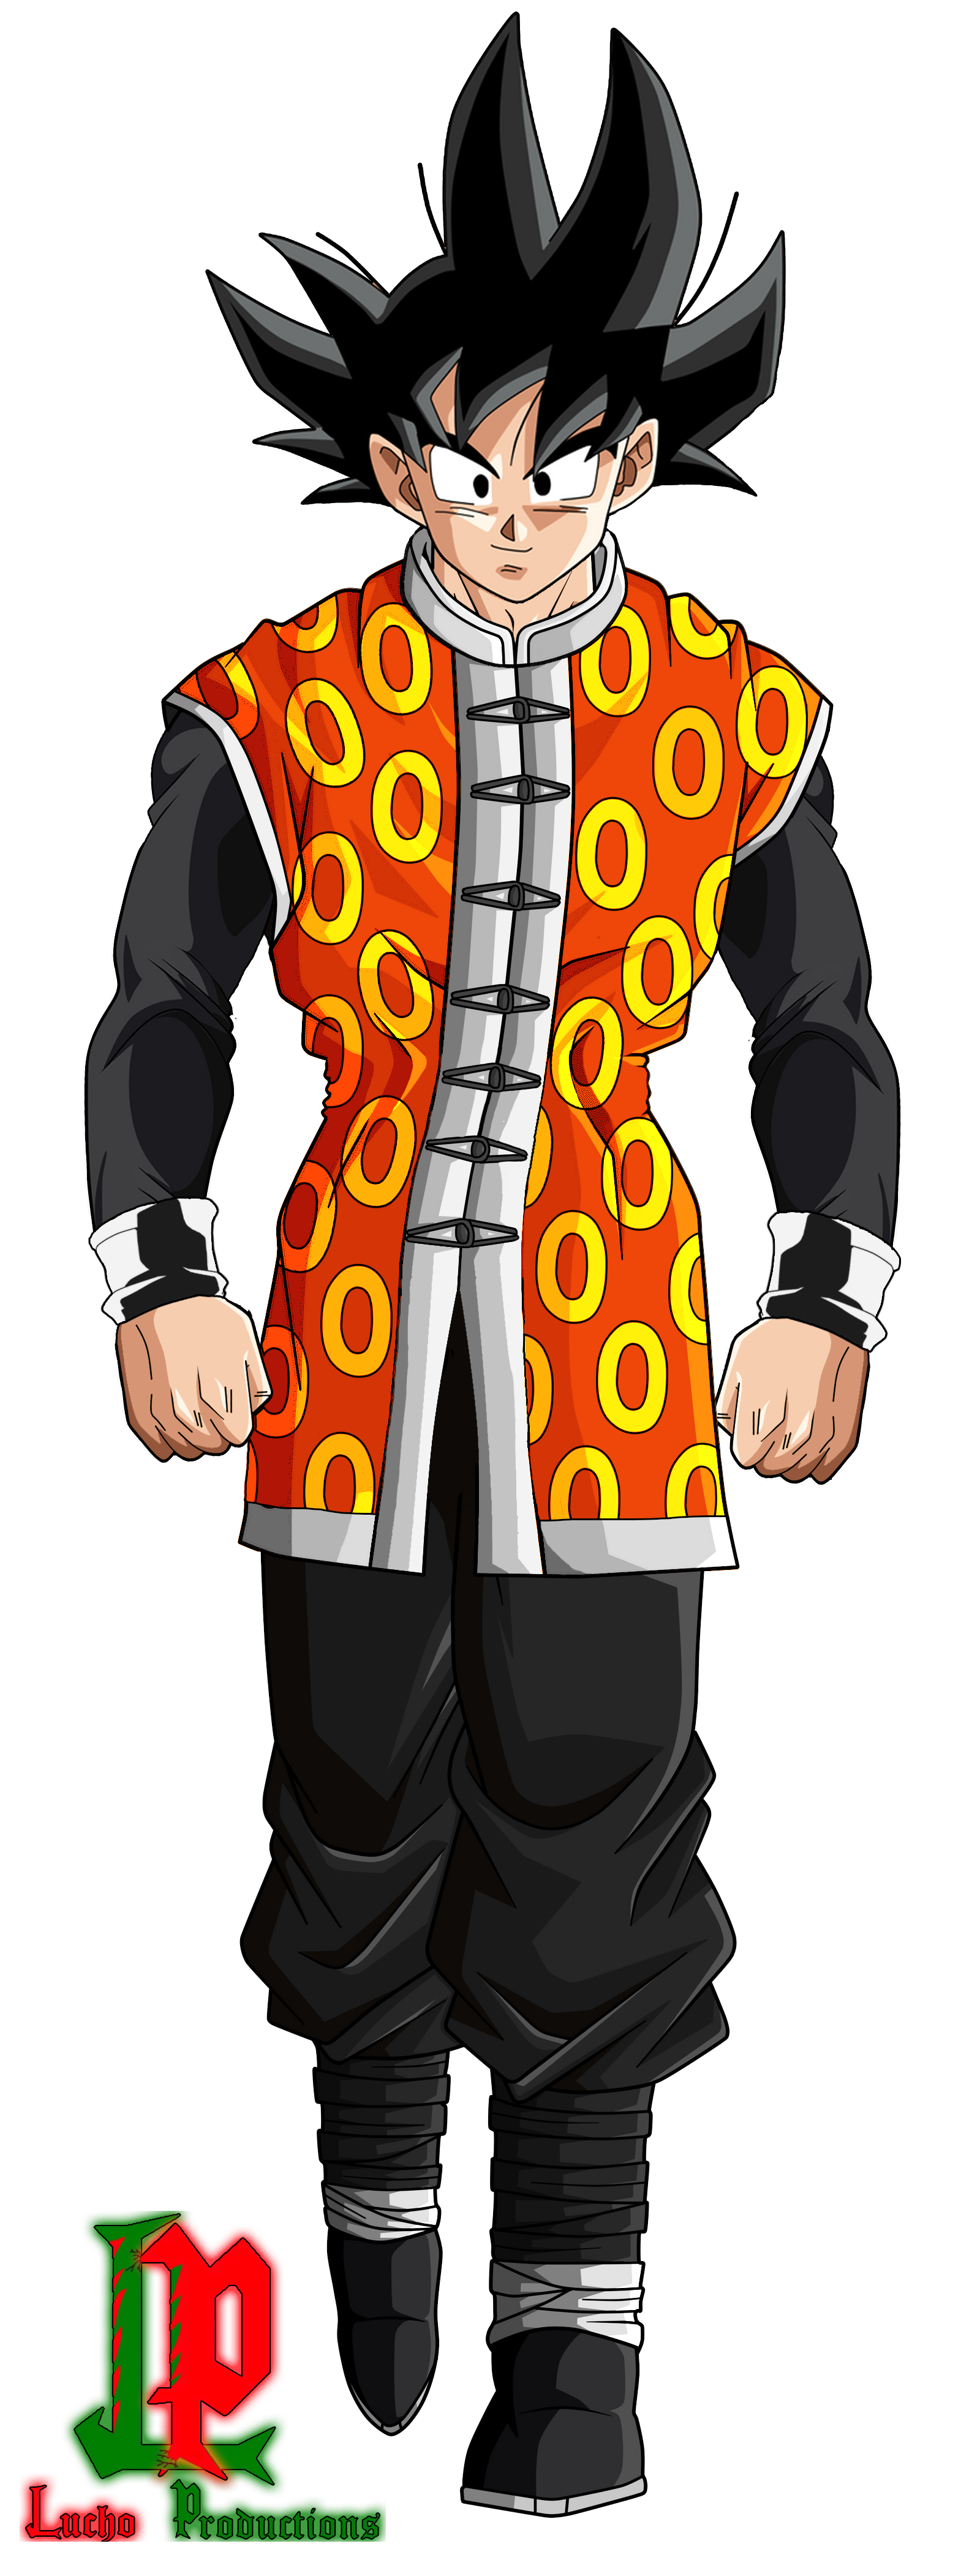 Goku traje Son Gohan by MegaStar55 on DeviantArt